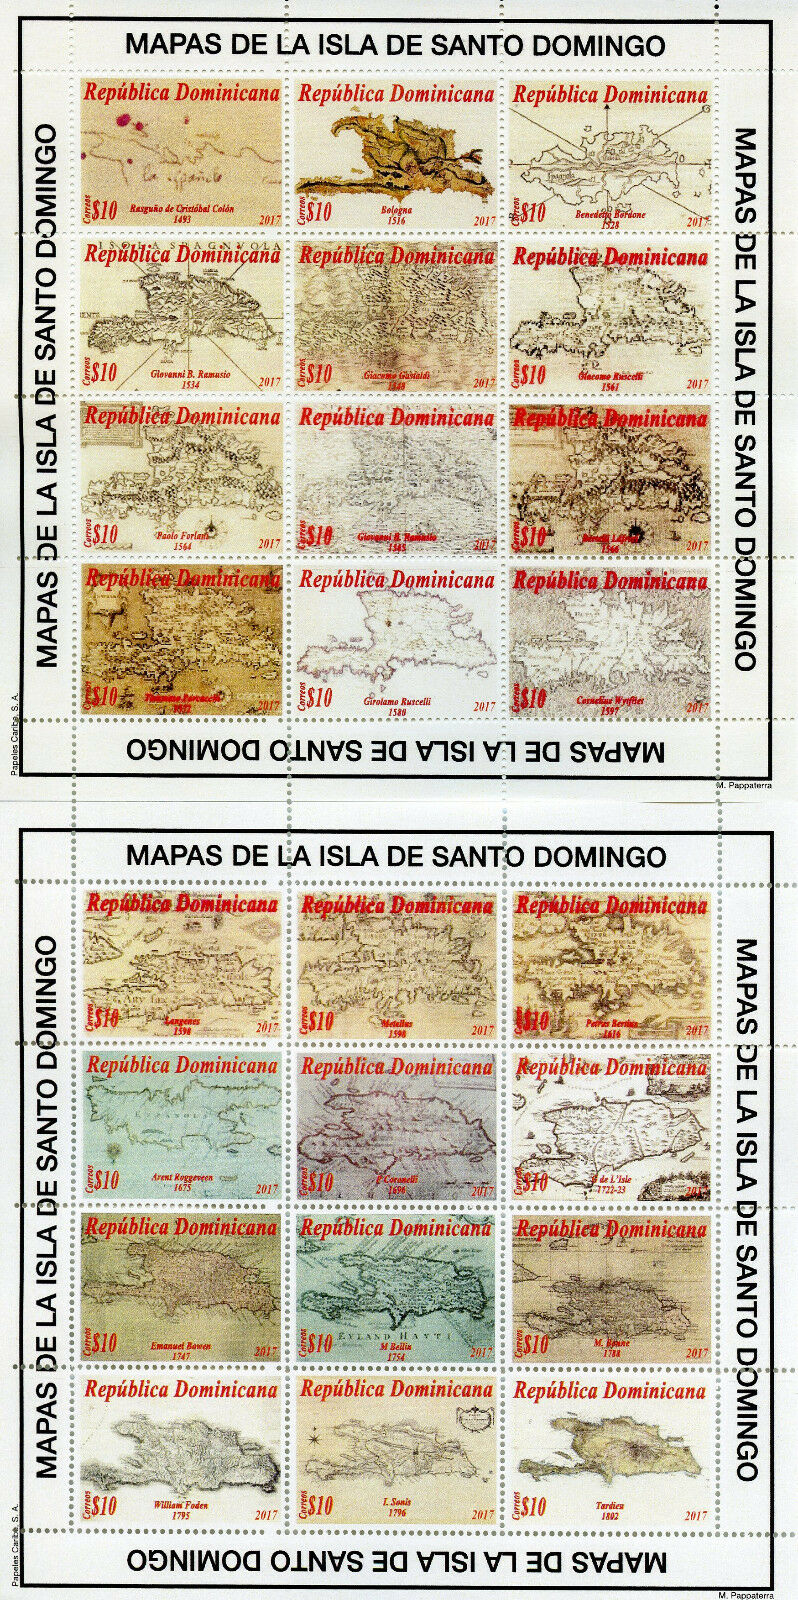 Dominican Republic 2017 MNH Maps of Santo Domingo Island 2x 16v M/S Stamps